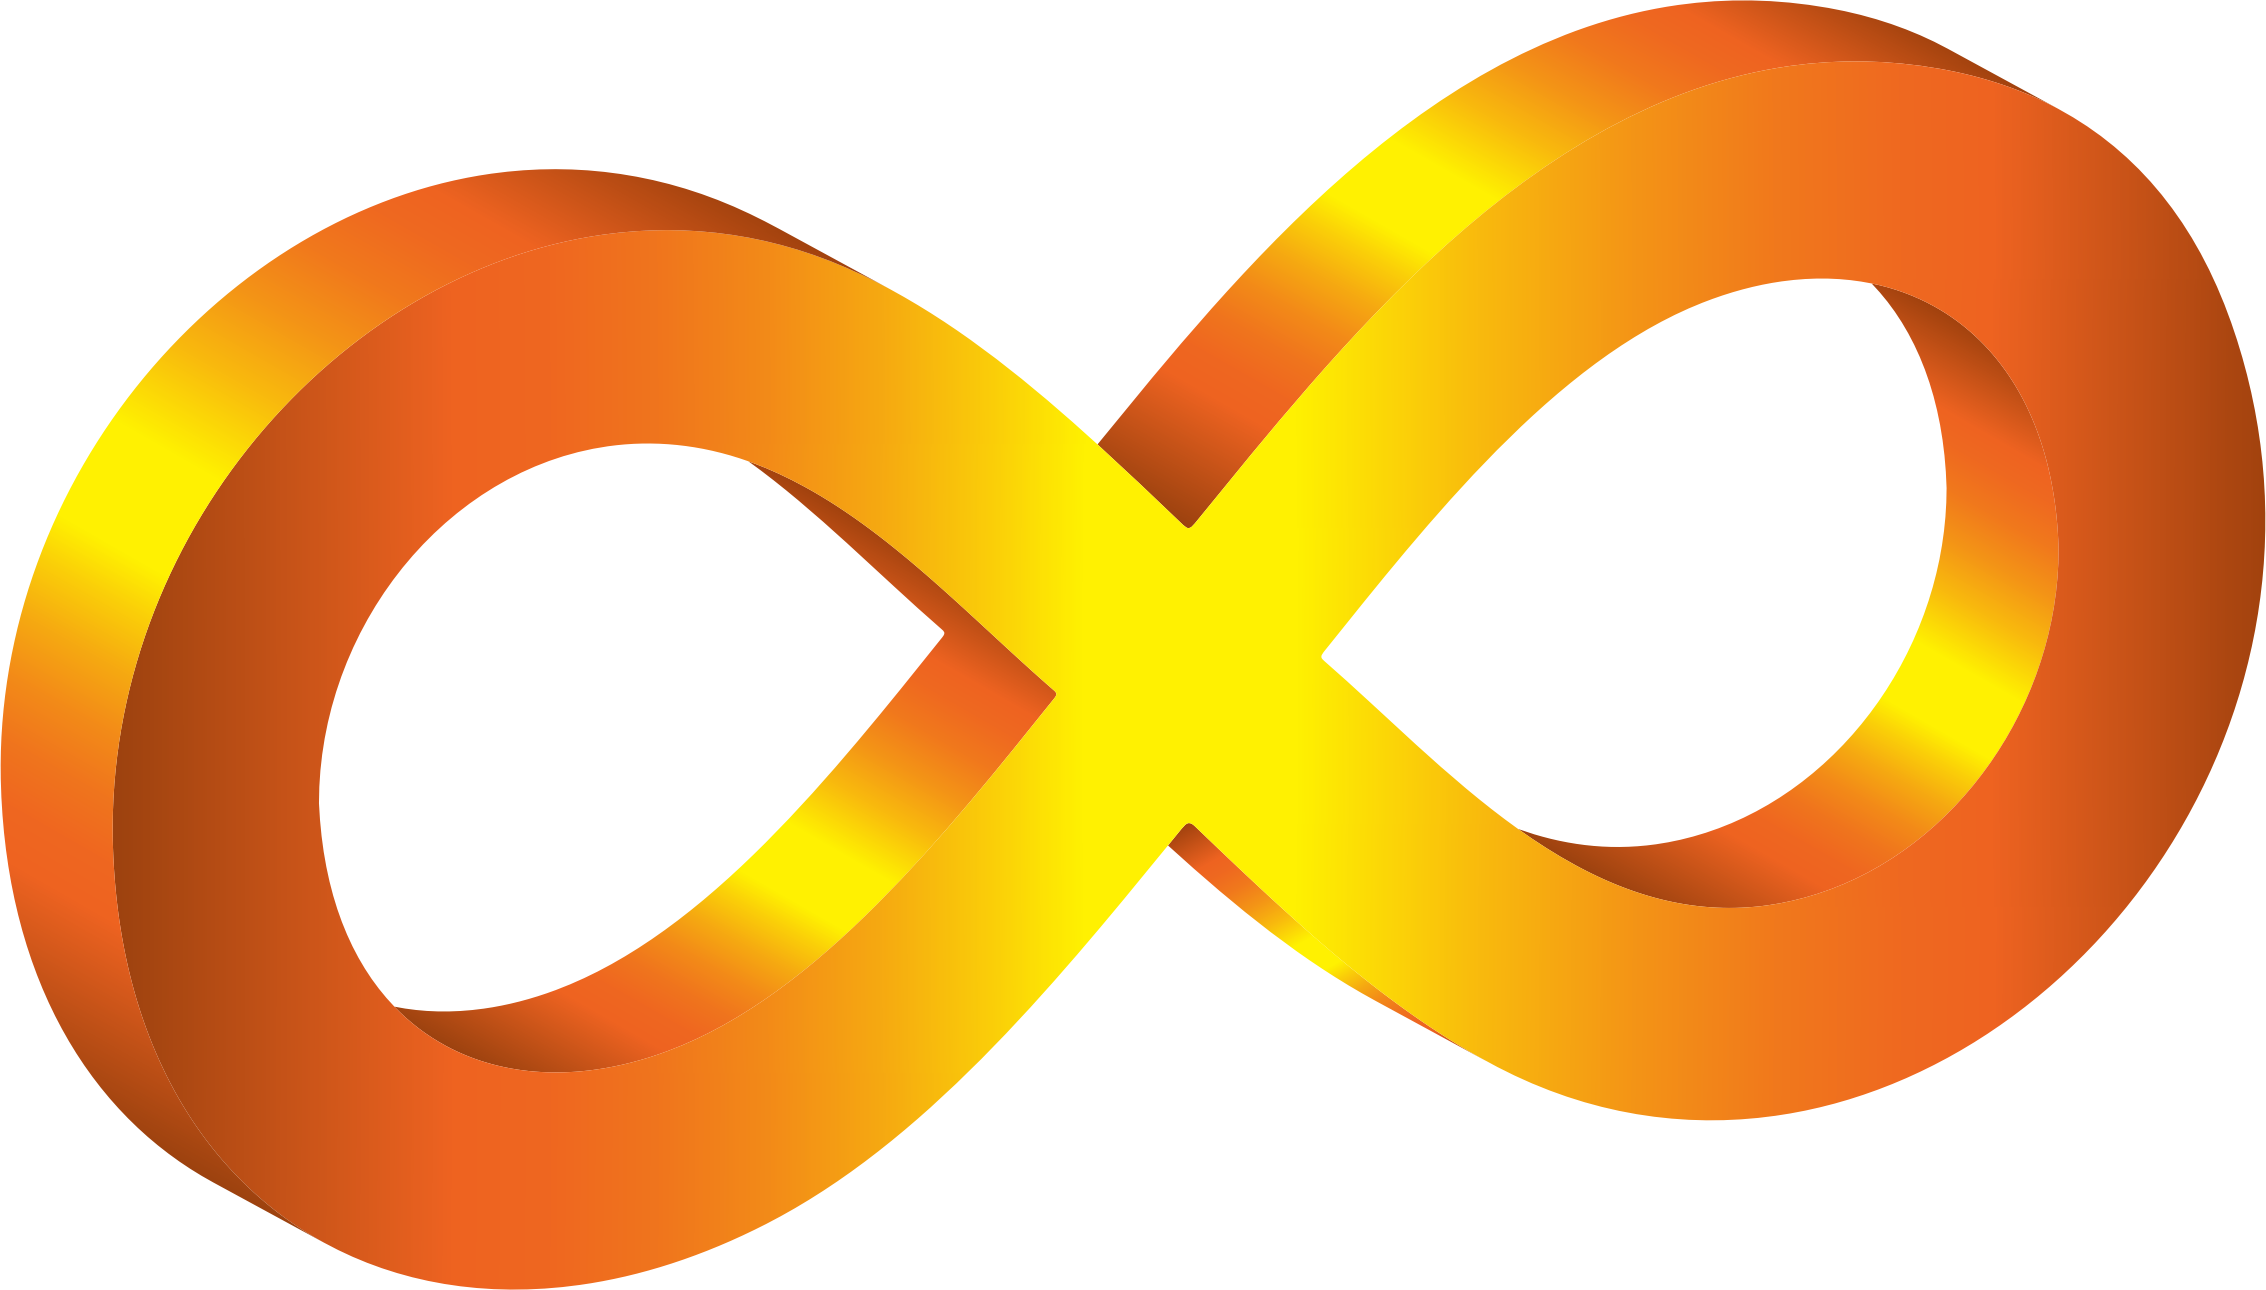 Infinity clipart infinity sign. D symbol variation big